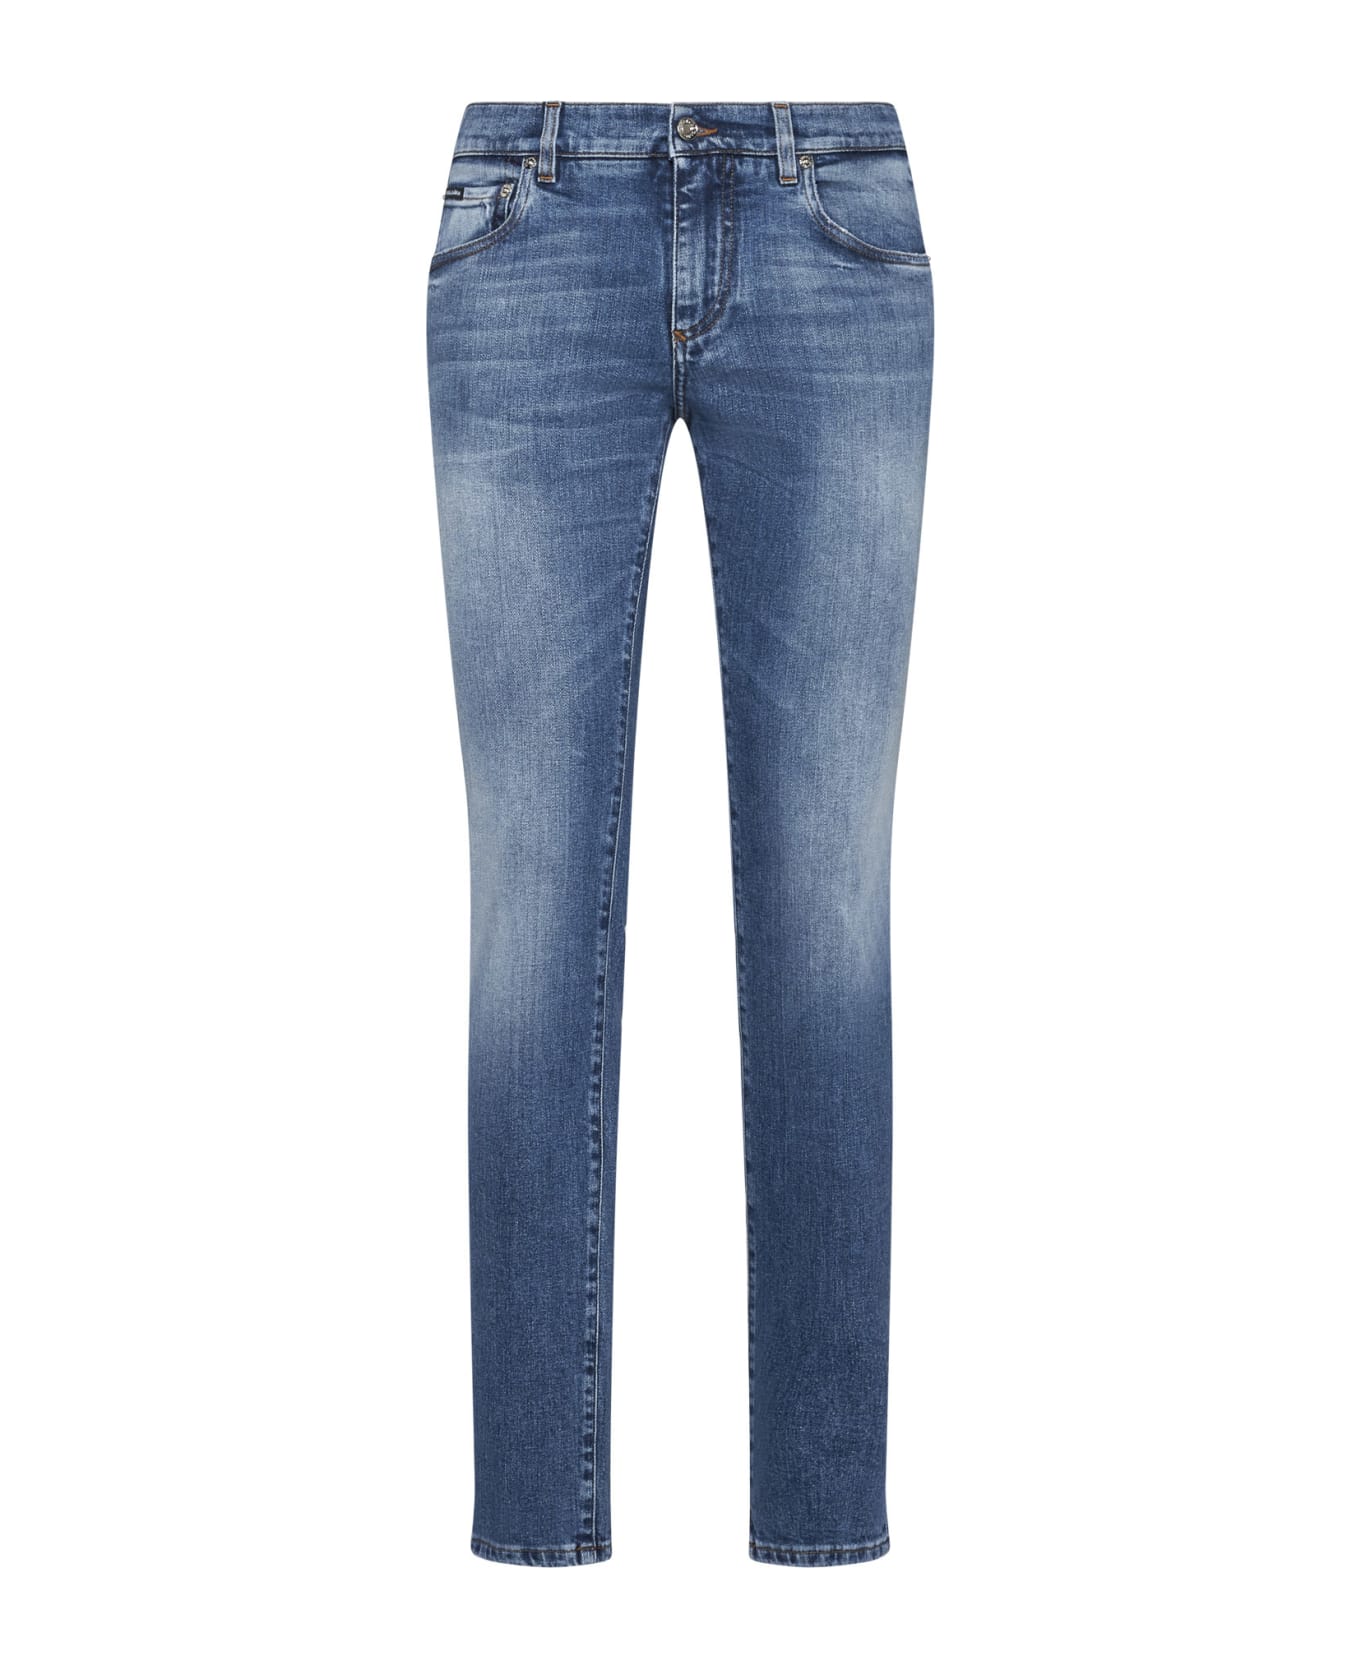 Dolce & Gabbana Jeans - Variante Abbinata